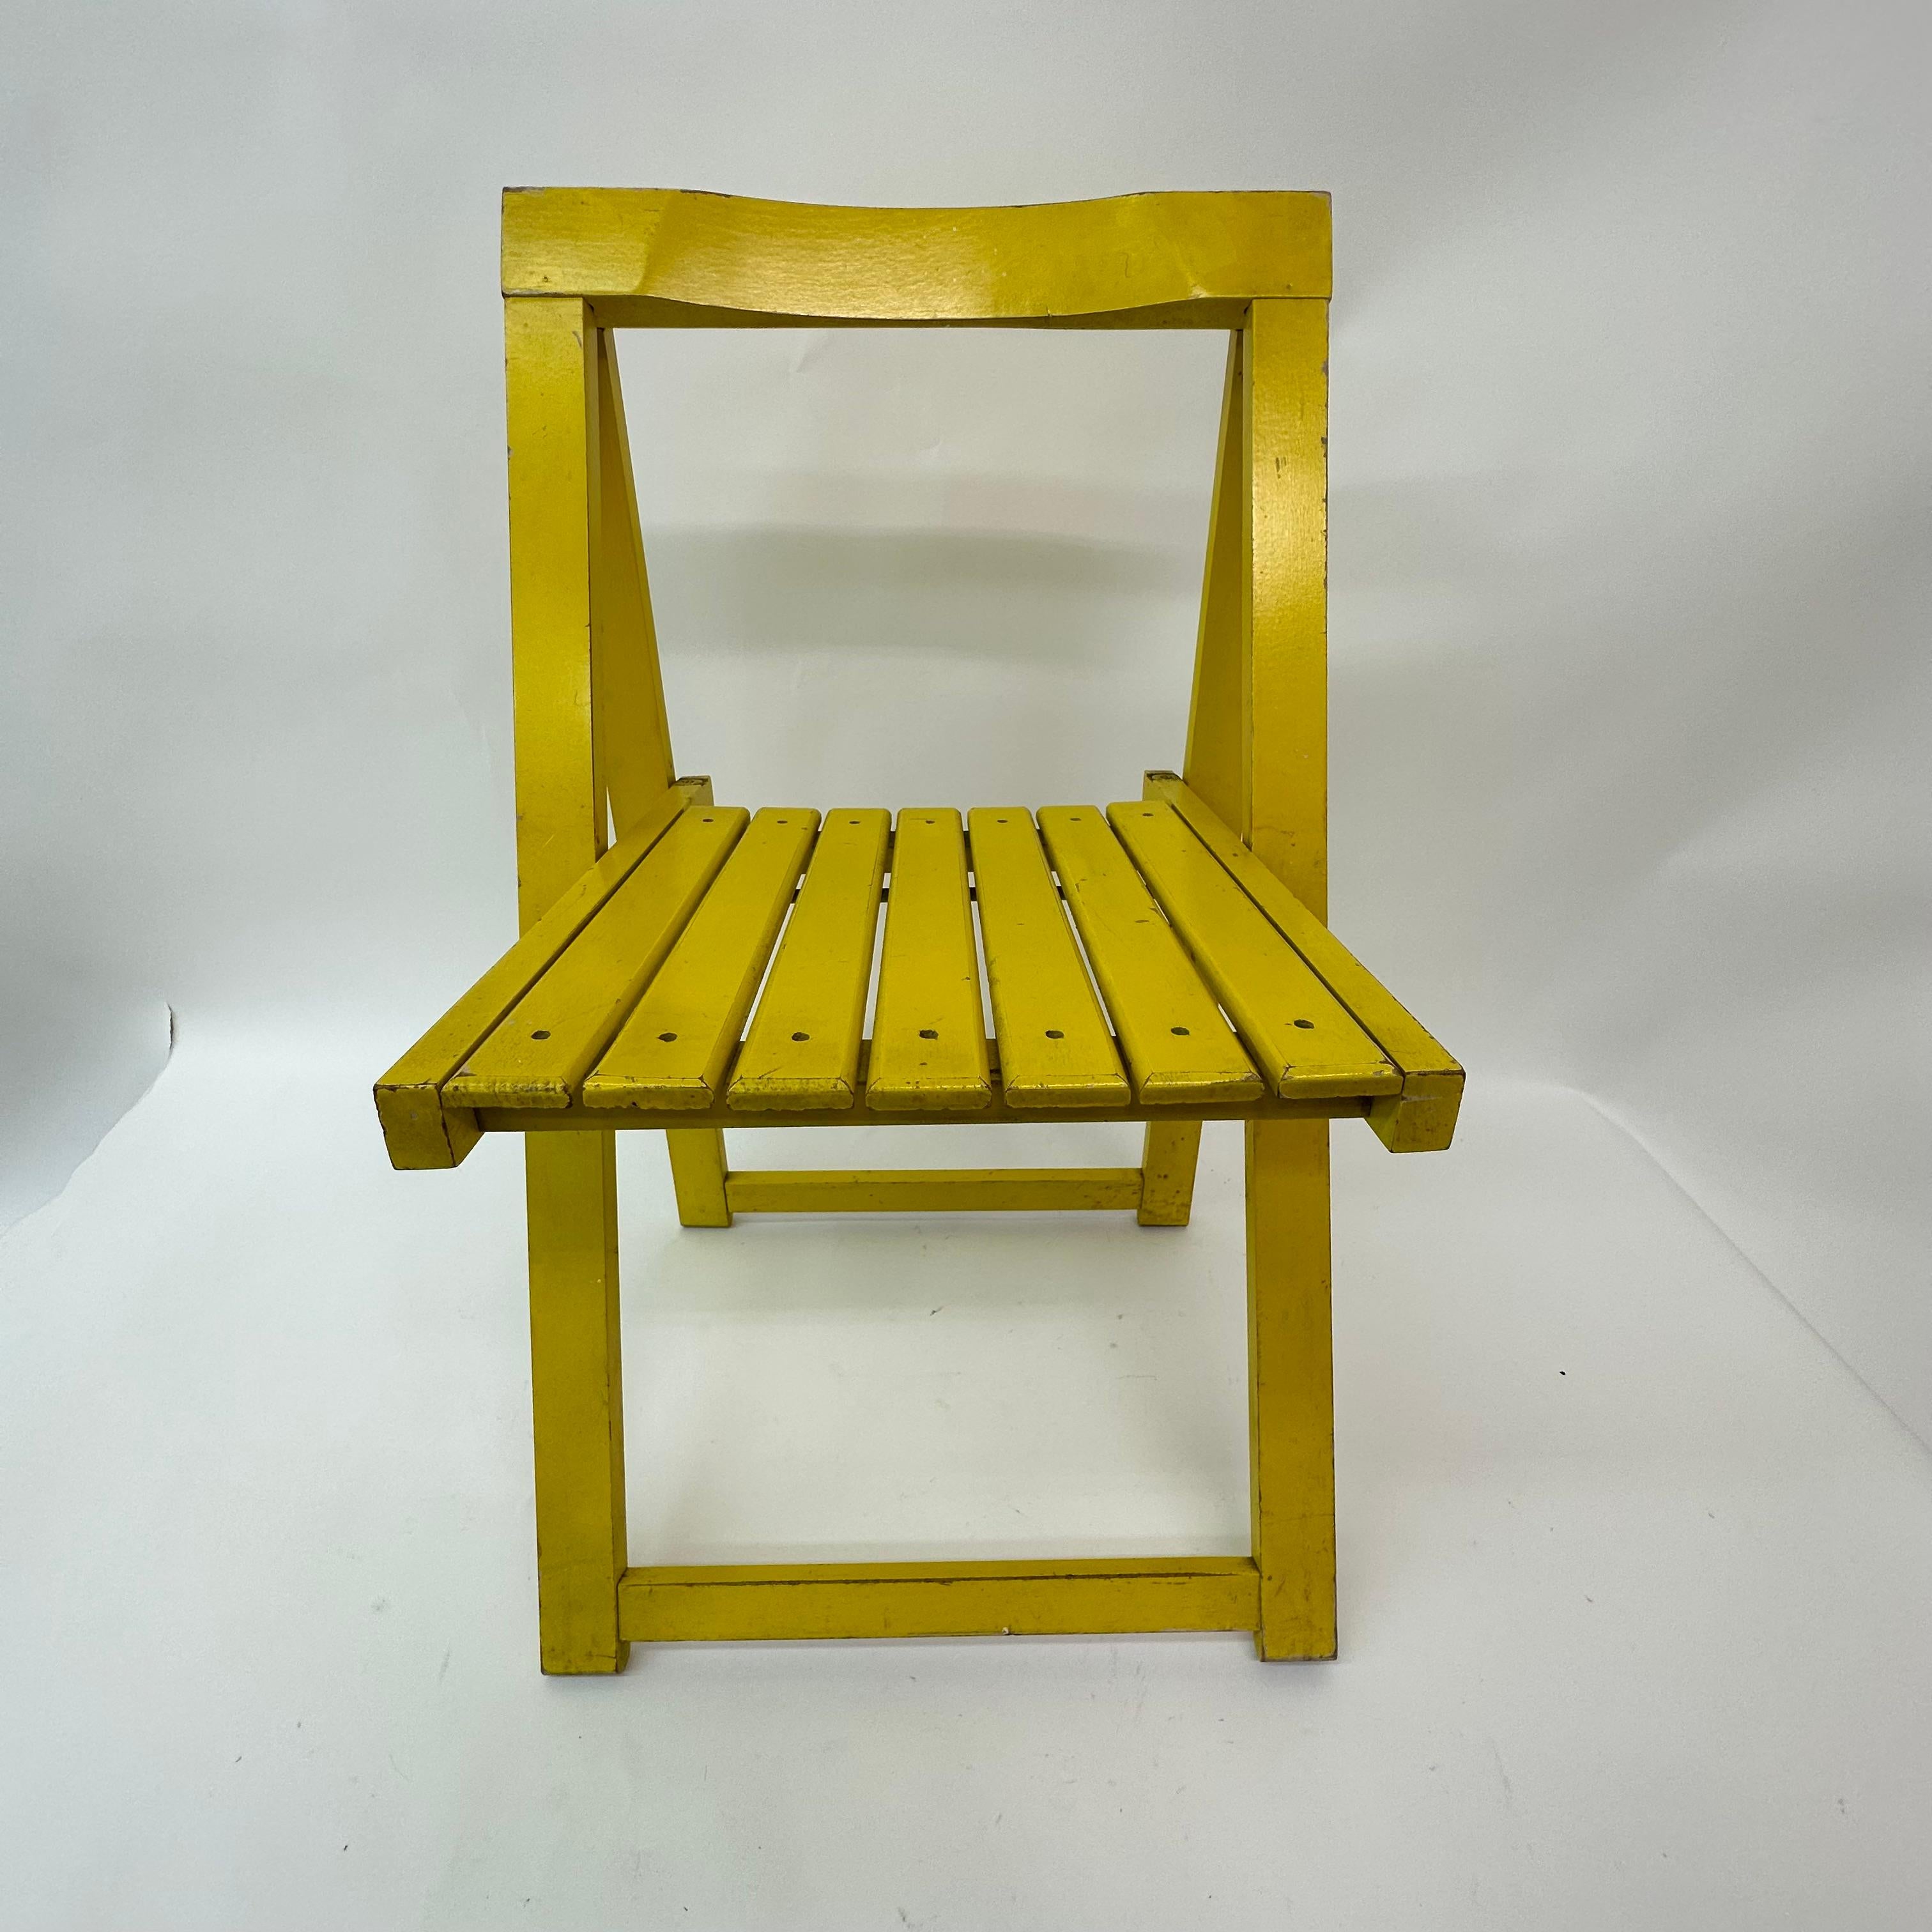 Aldo Jacober Folding Chair for Alberto Bazzani, 1960’s For Sale 13